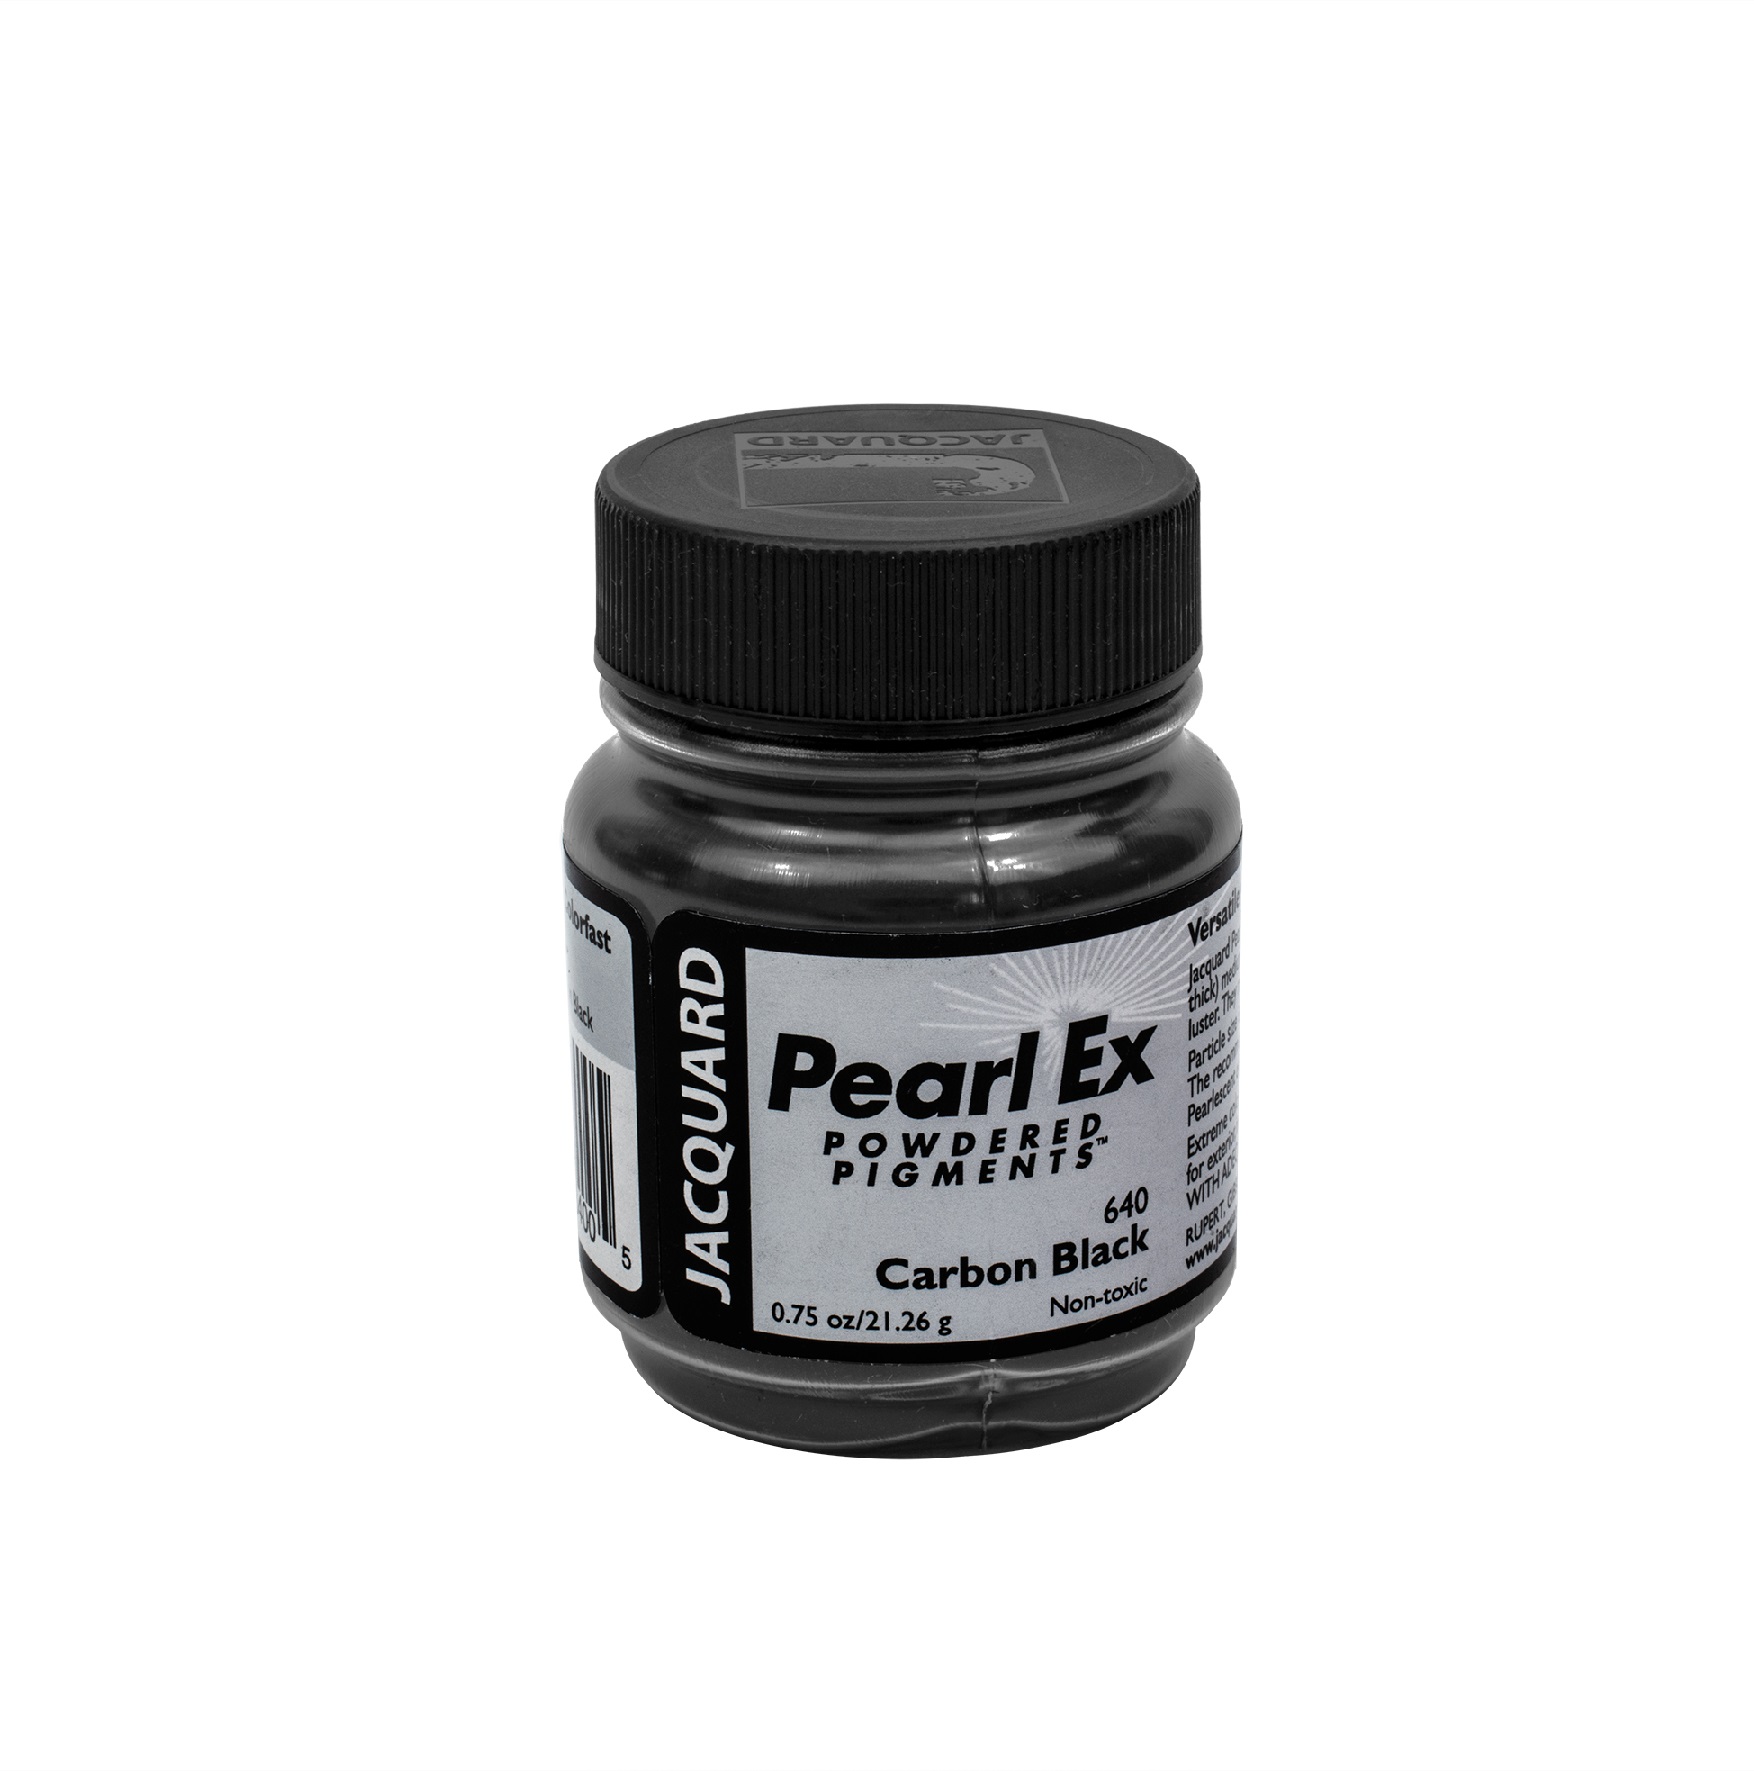 PIGMENTO PEARL EX CARBON BLACK X 21,26 g